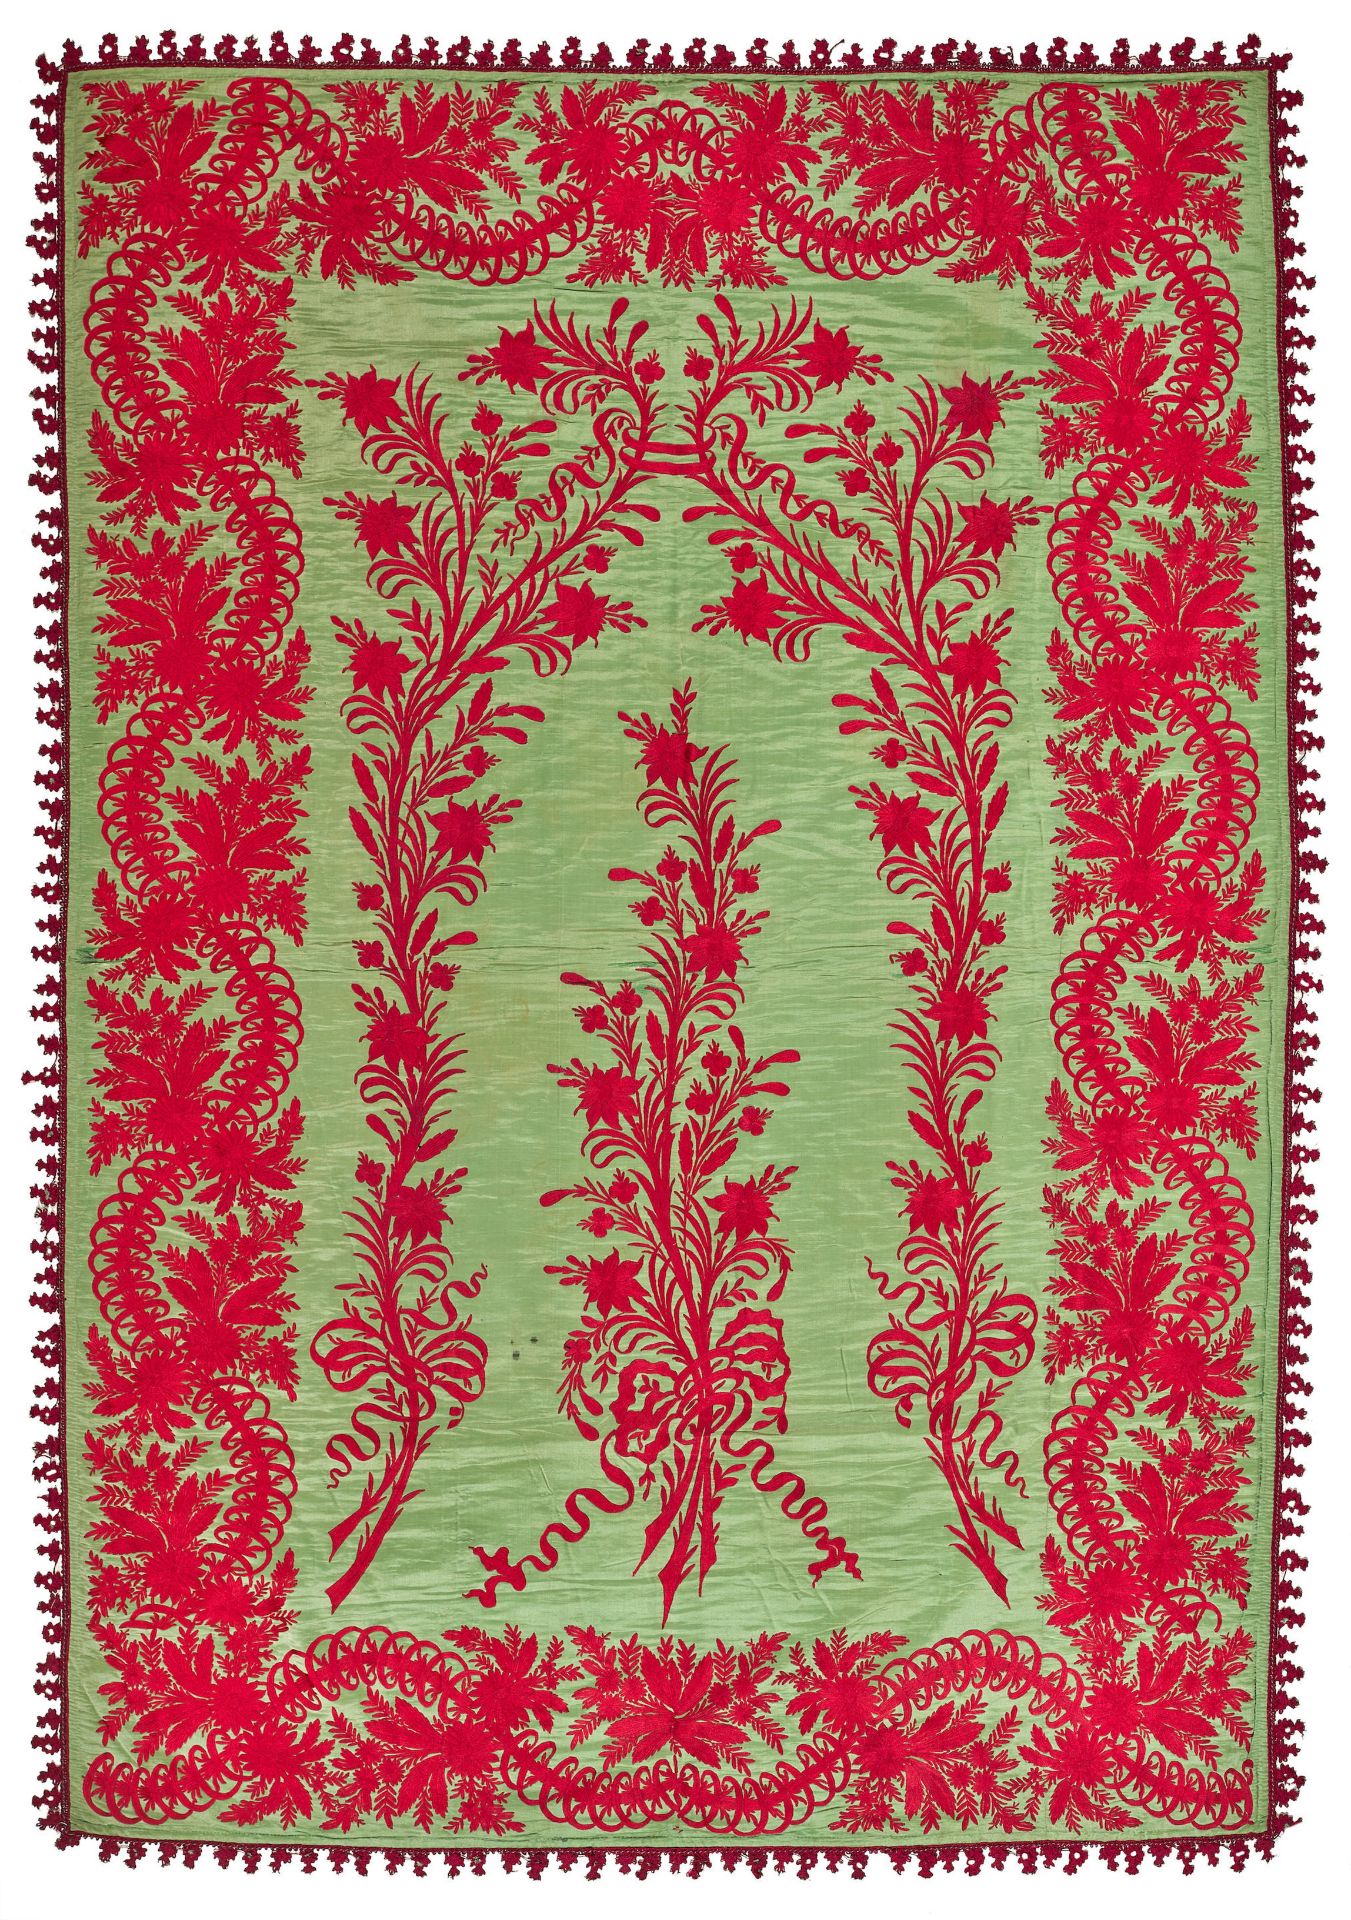 Panneau de Mihrab Ottoman en soie brod&#233;e, Turquie XVIII-XIXe si&#232;cle An Ottoman silk-em...